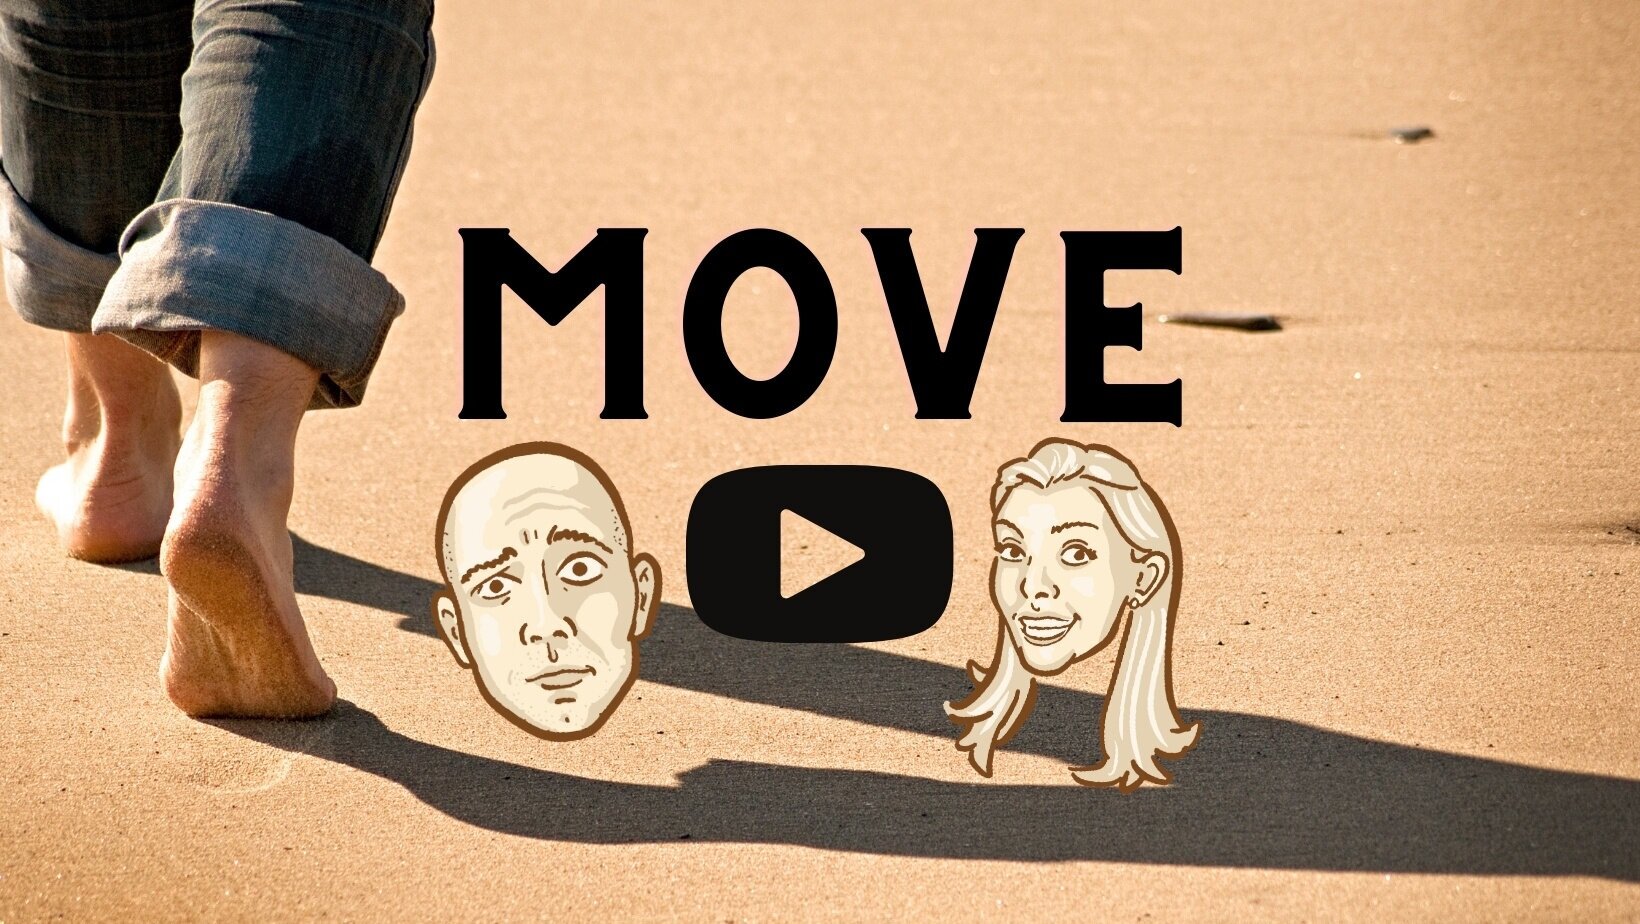 Move - Now Live